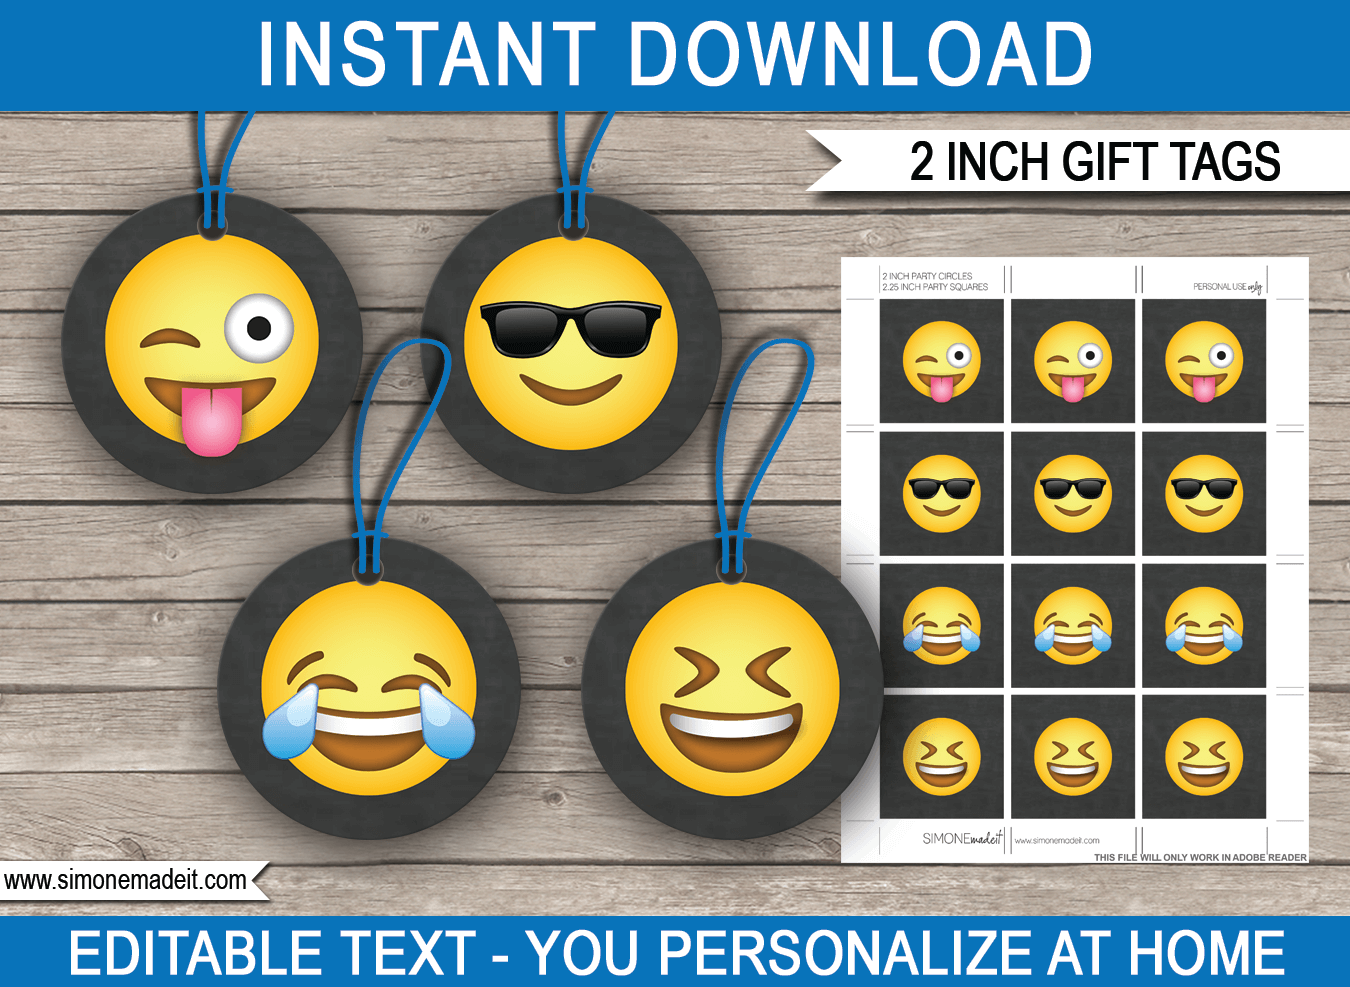 Boys Emoji Printable Gift Tags 2 inch | Editable DIY Template | Instant Download via simonemadeit.com